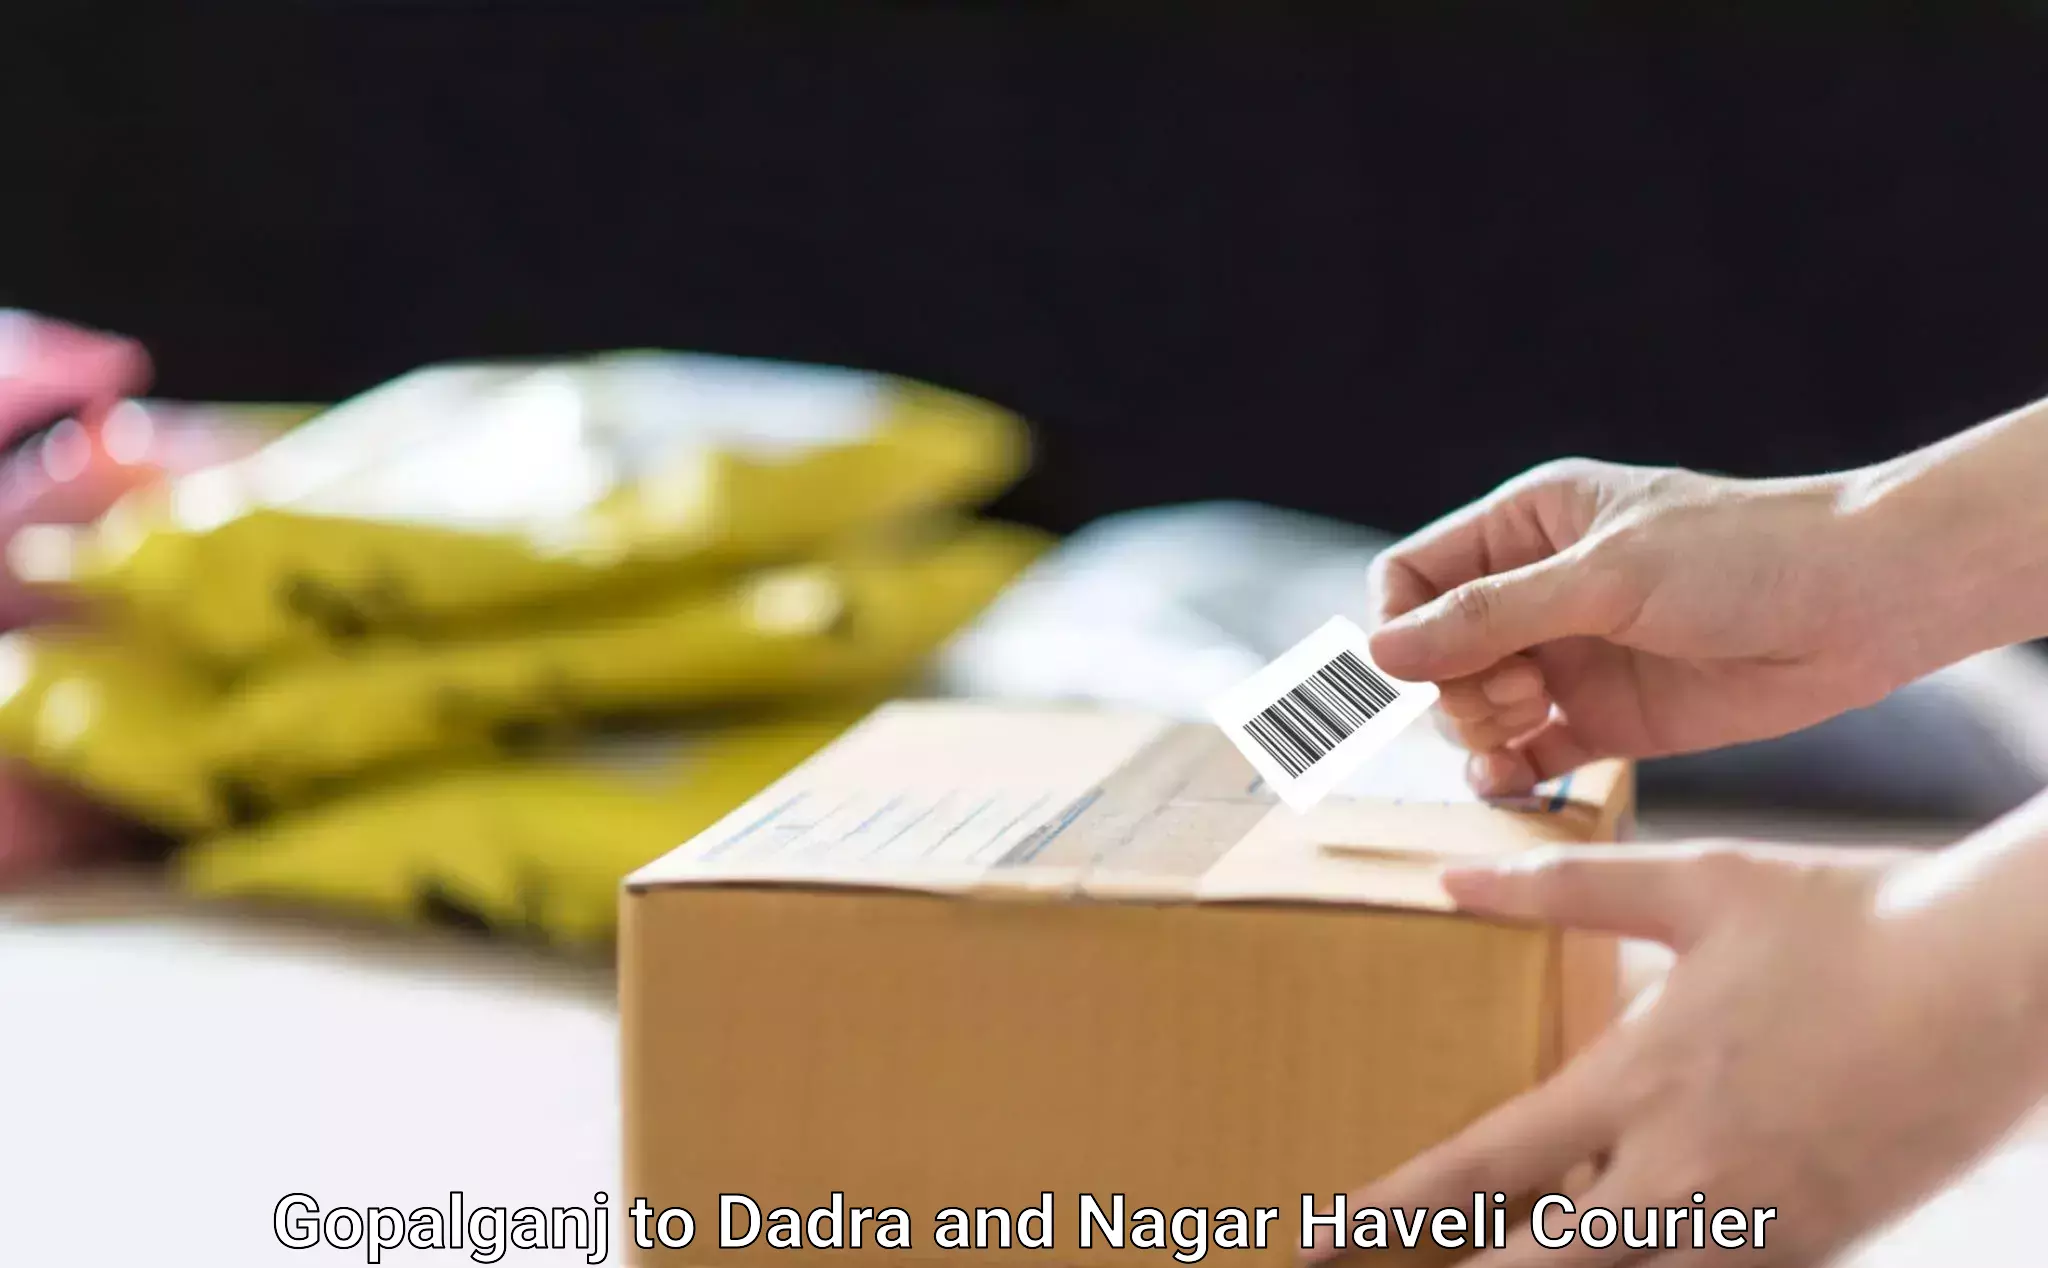 Furniture delivery service Gopalganj to Dadra and Nagar Haveli